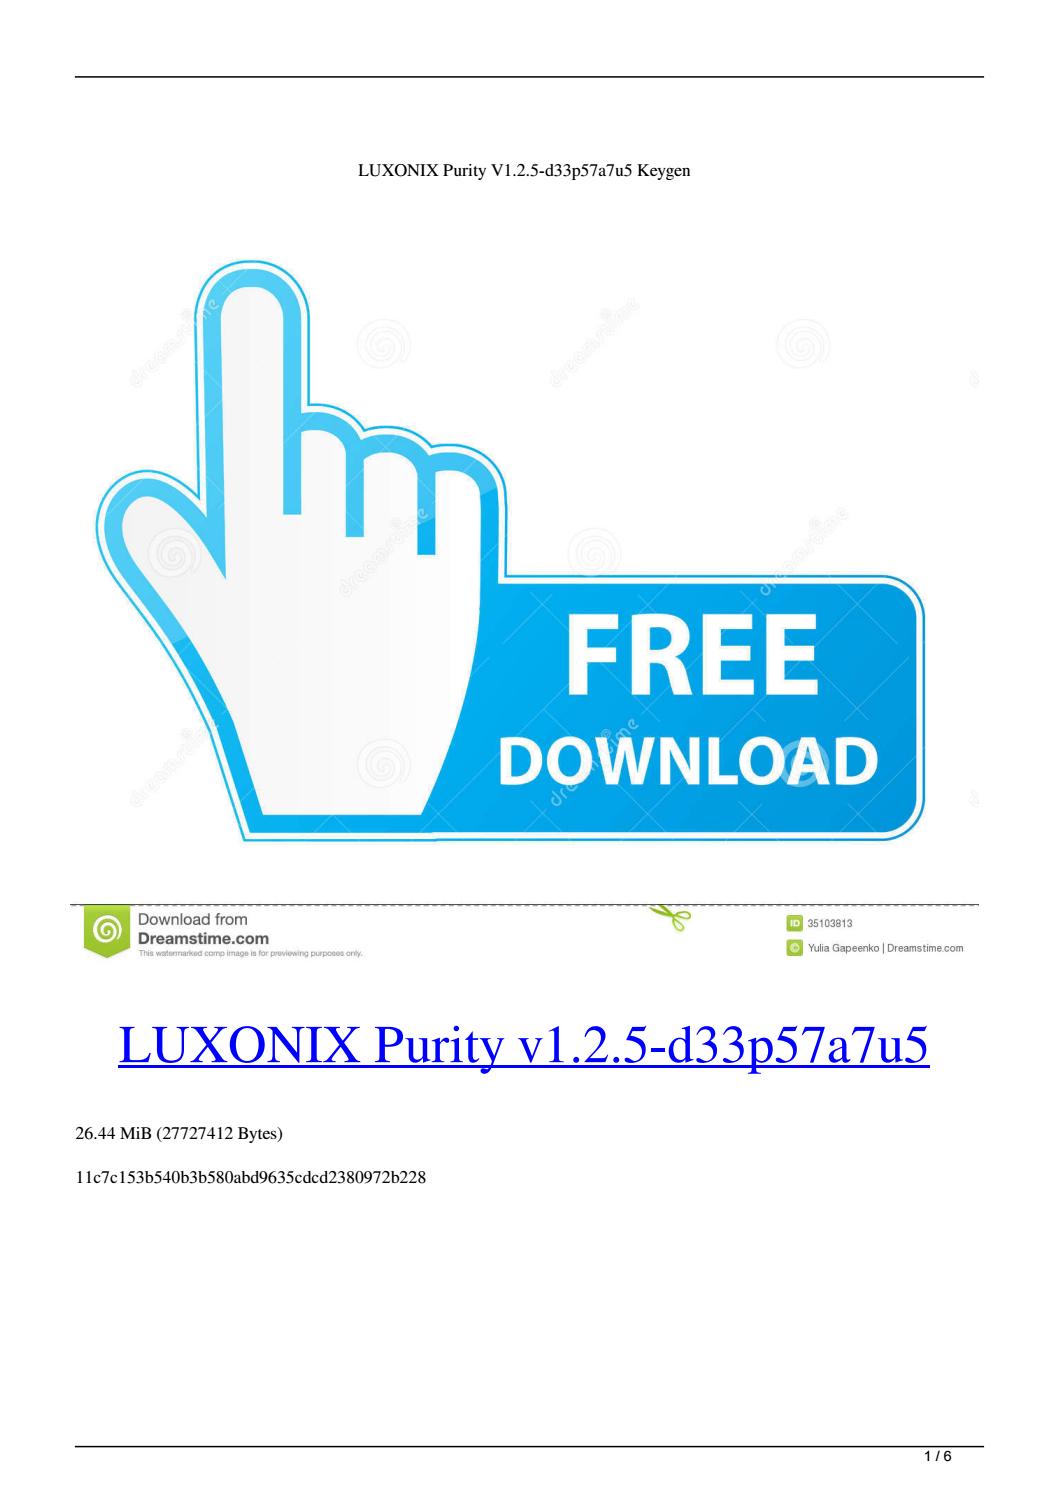 Luxonix purity free download mac